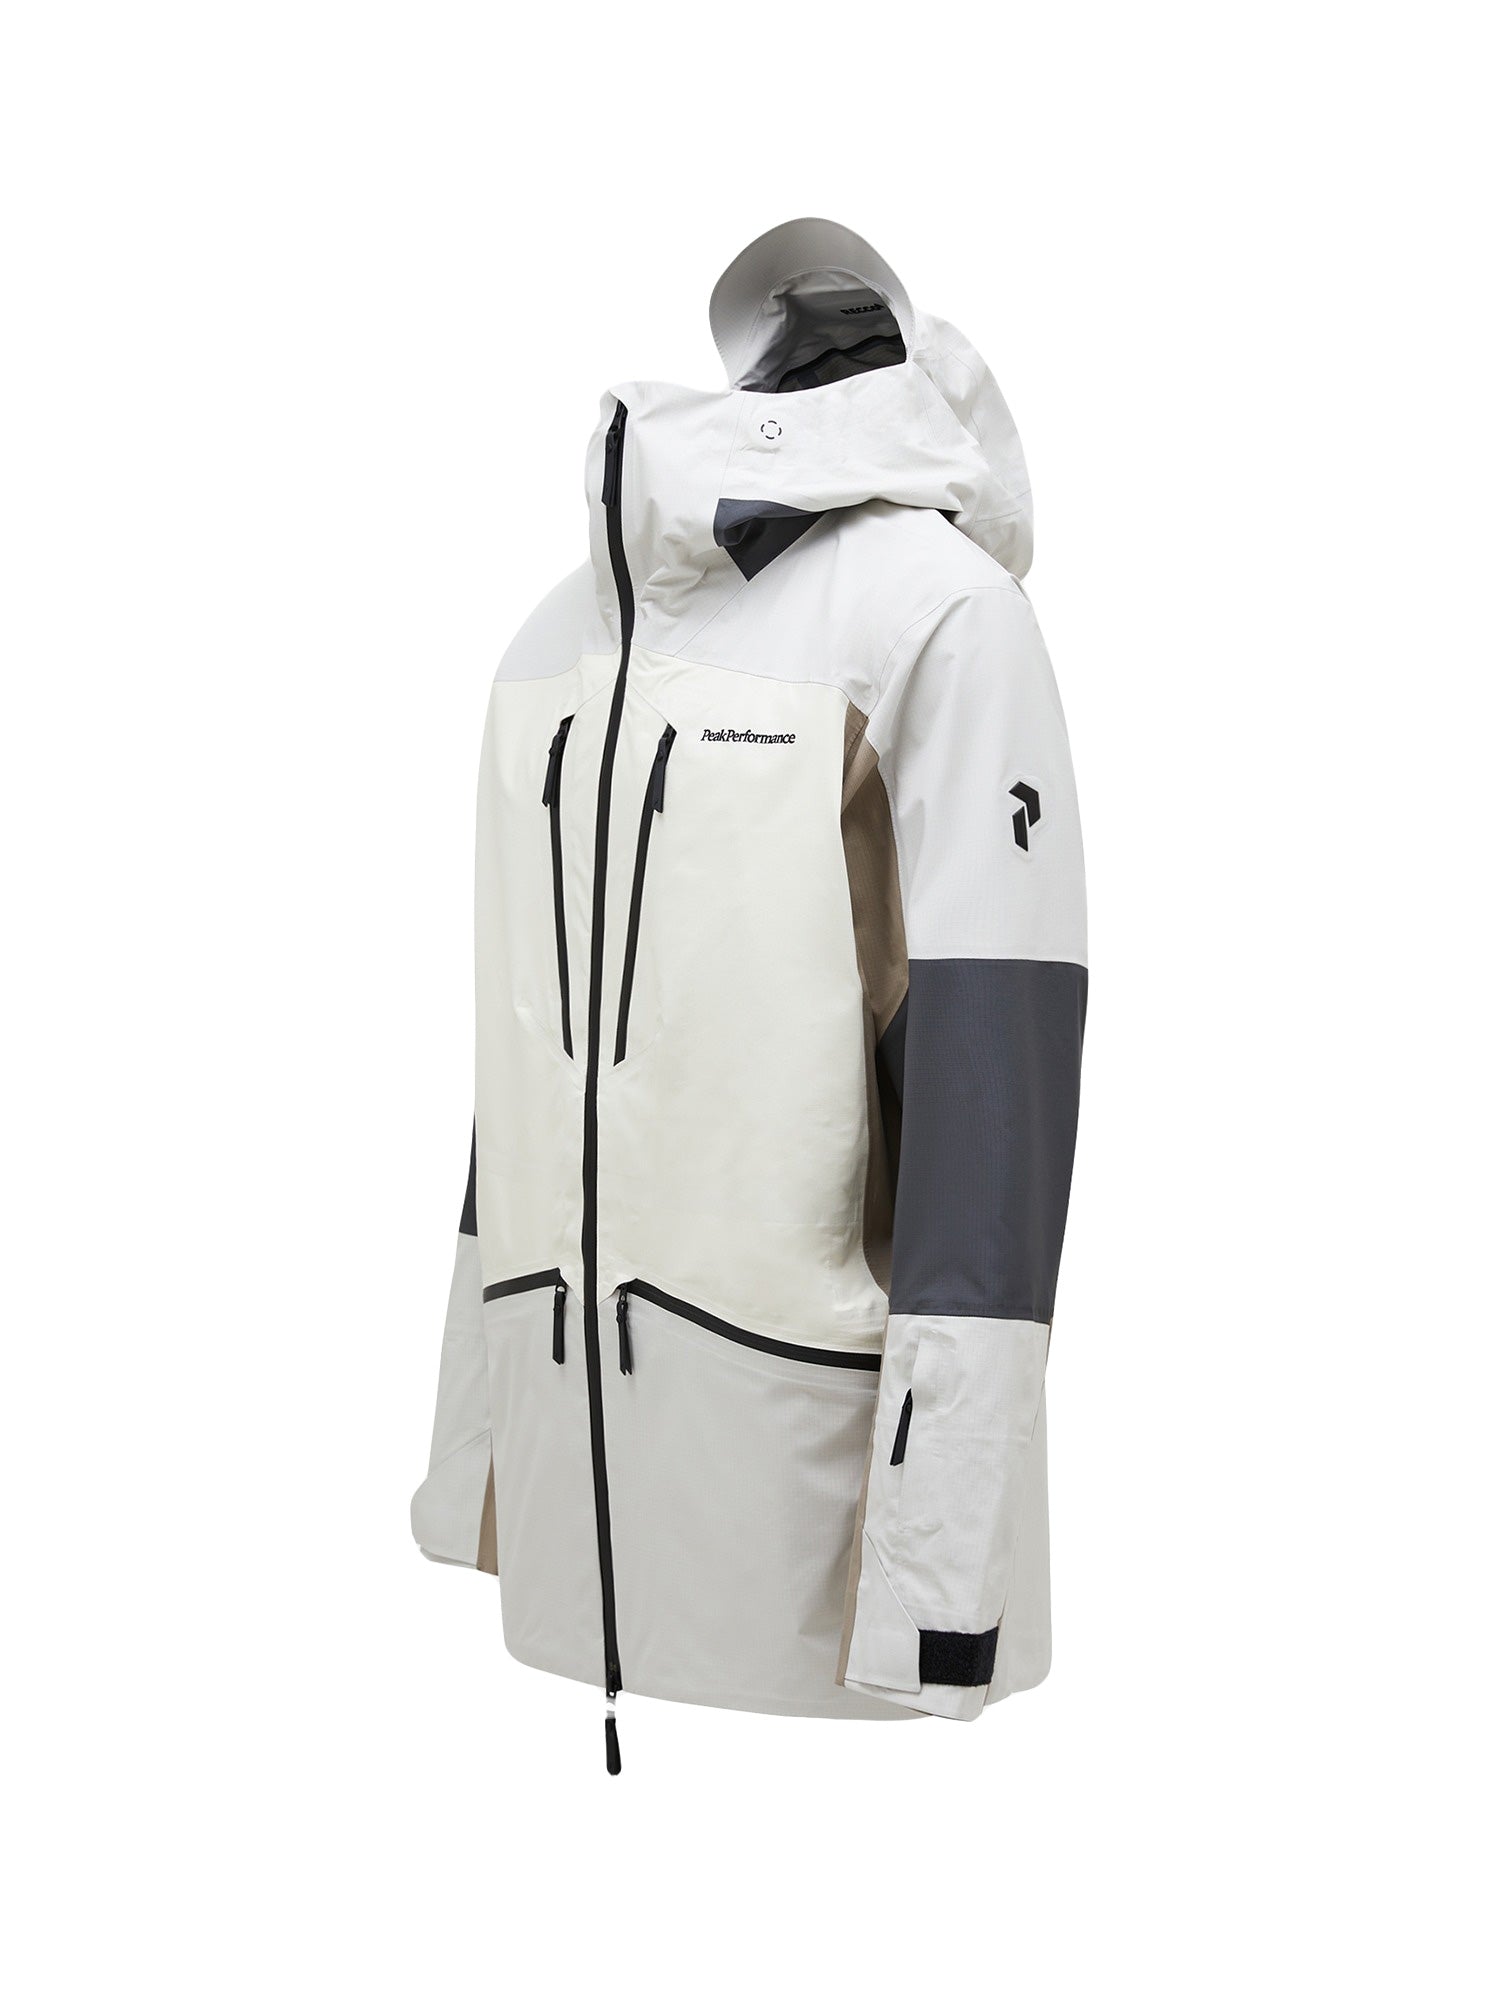 M Vertical Gore-Tex Pro Jacket